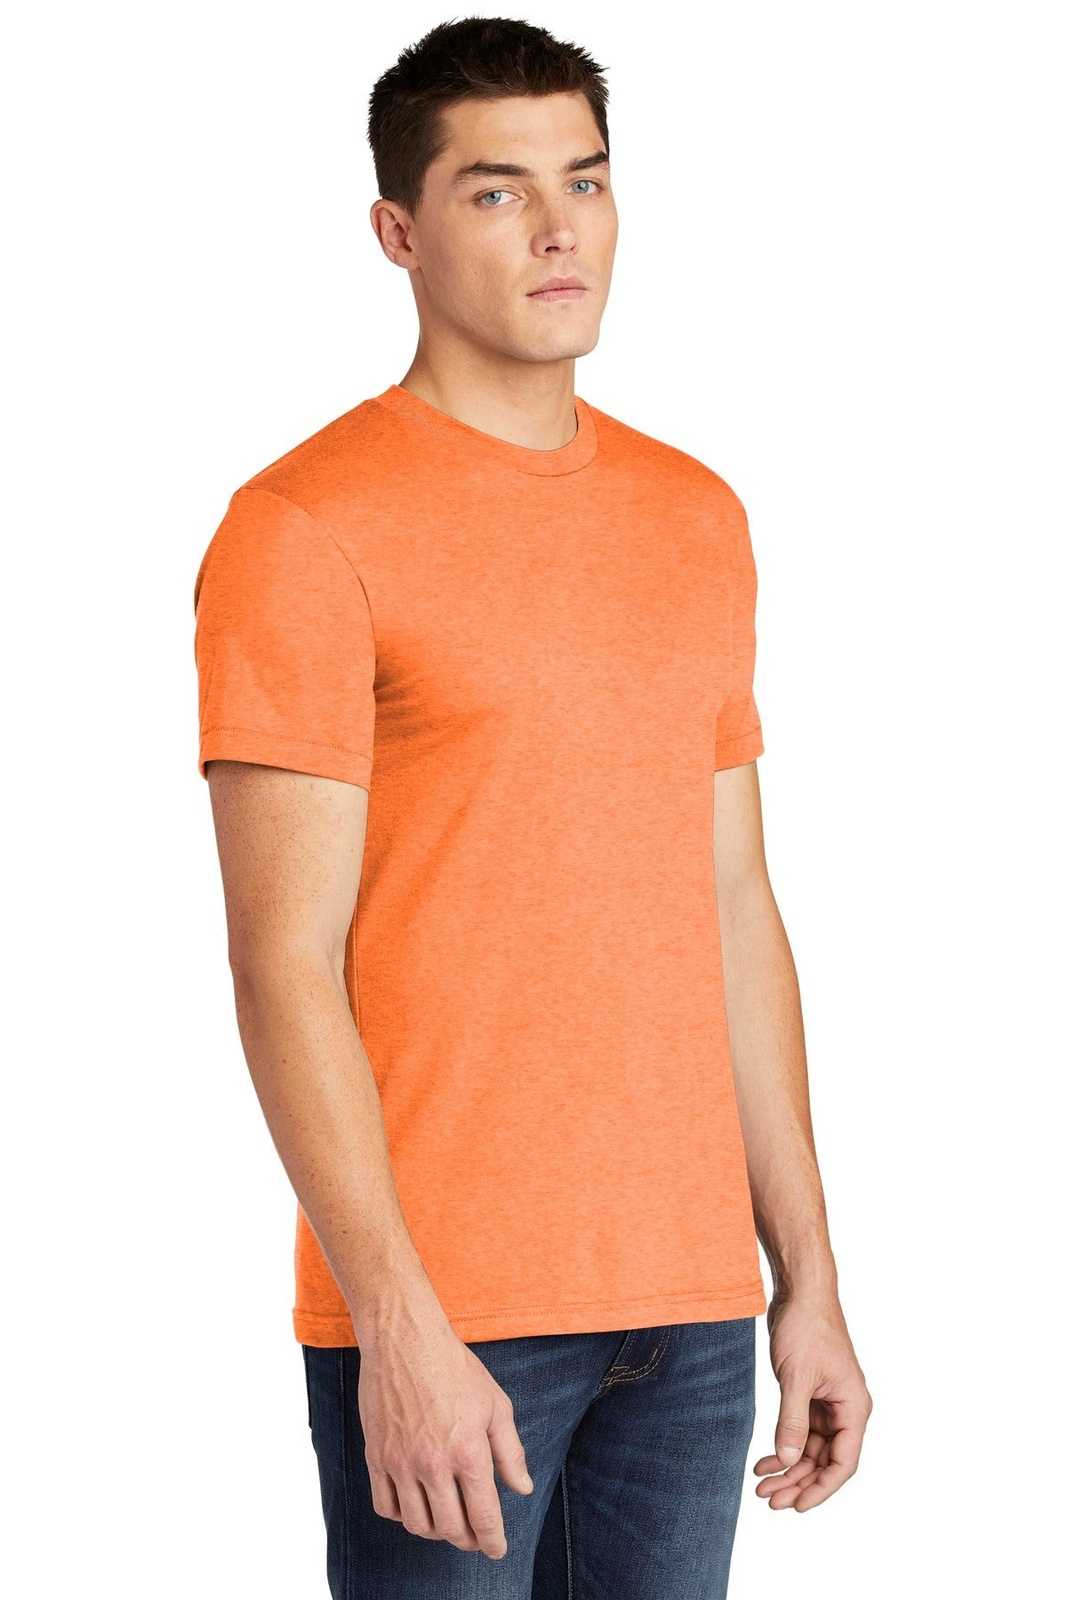 American Apparel BB401W Poly-Cotton T-Shirt - Heather Orange - HIT a Double